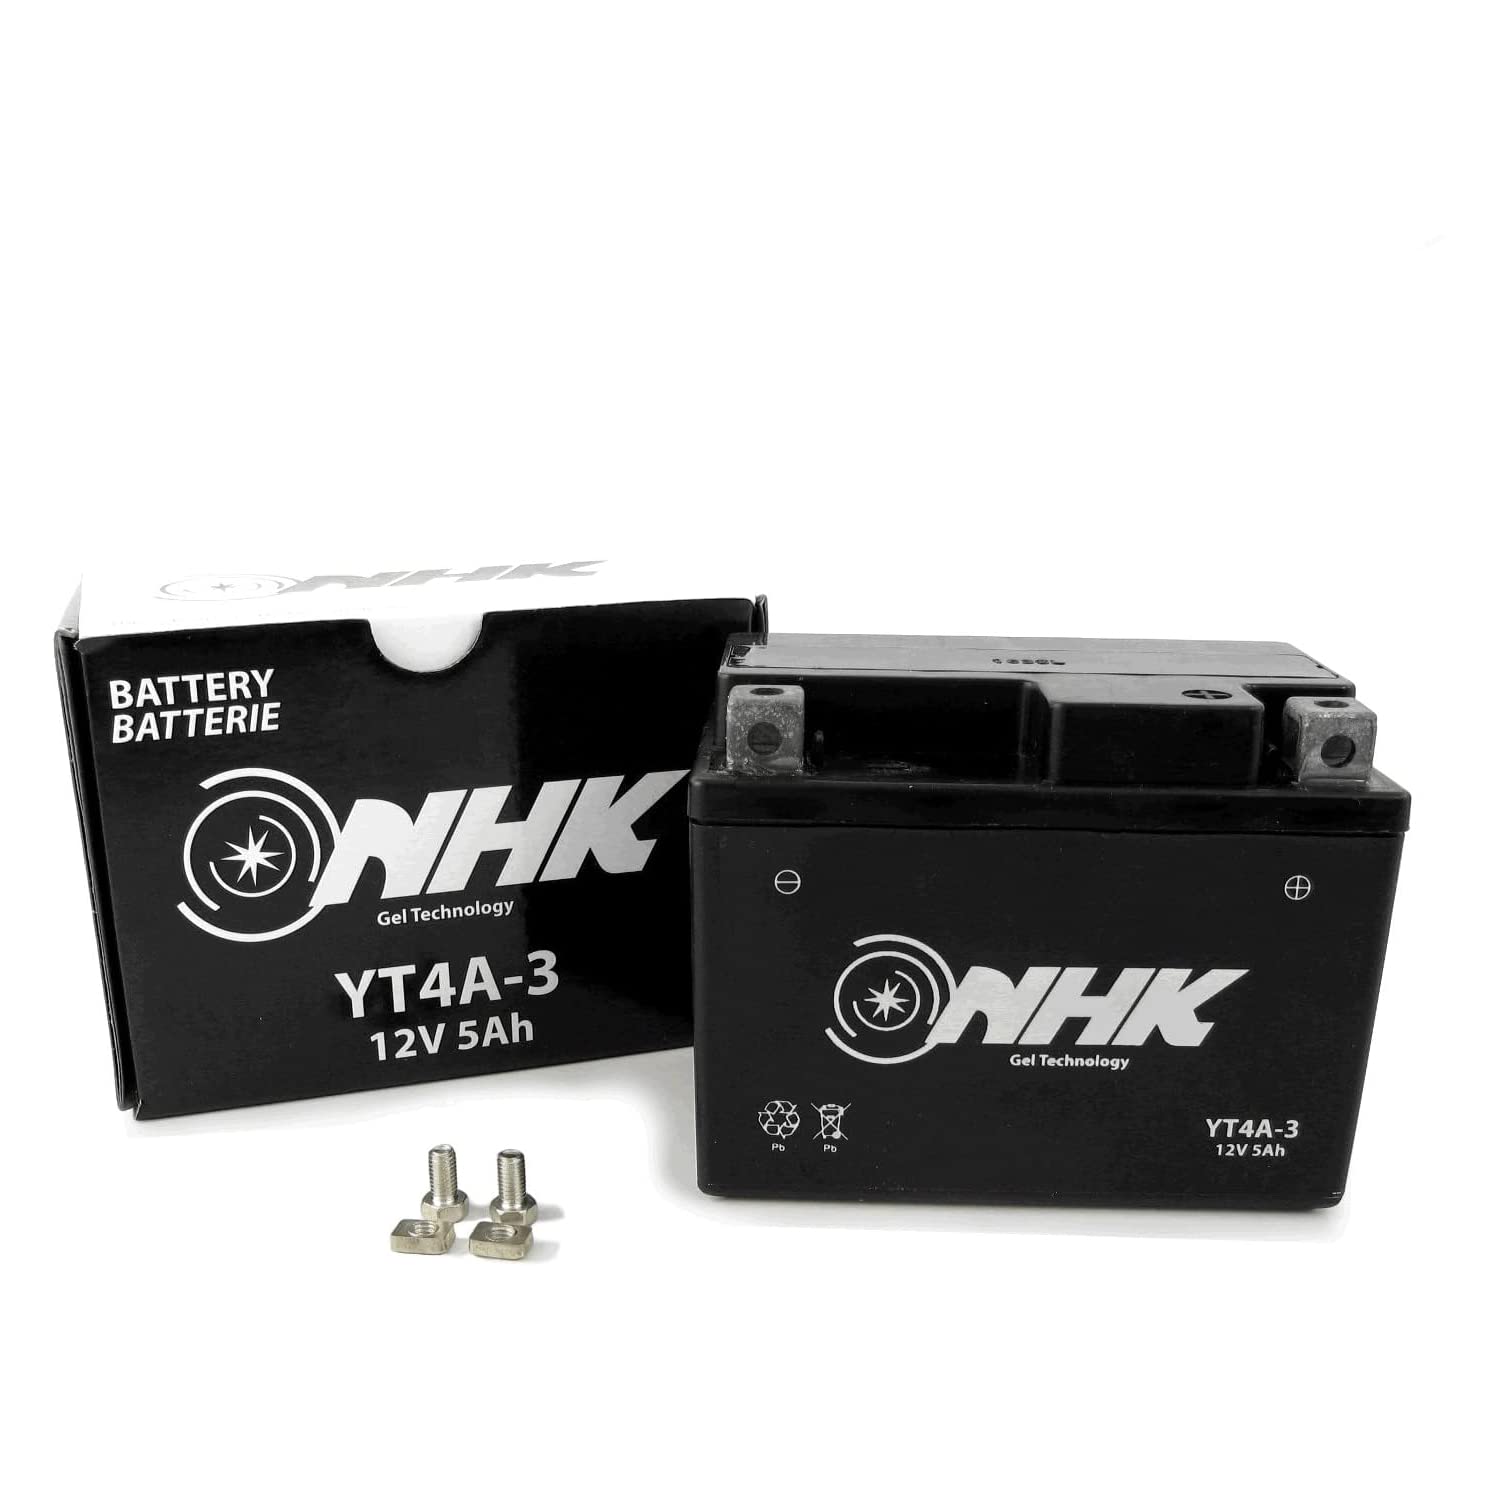 Wartungsfreie Gel Batterie 5Ah kompatibel mit Yamaha Zest 80 94-4MU, Zest 50 93-99 4FW, Breeze 50 4RC, Axis 50 3UG/5AK, Jog 50 92-01 4SC, 3SA (YT4A-3) von Area Longboard